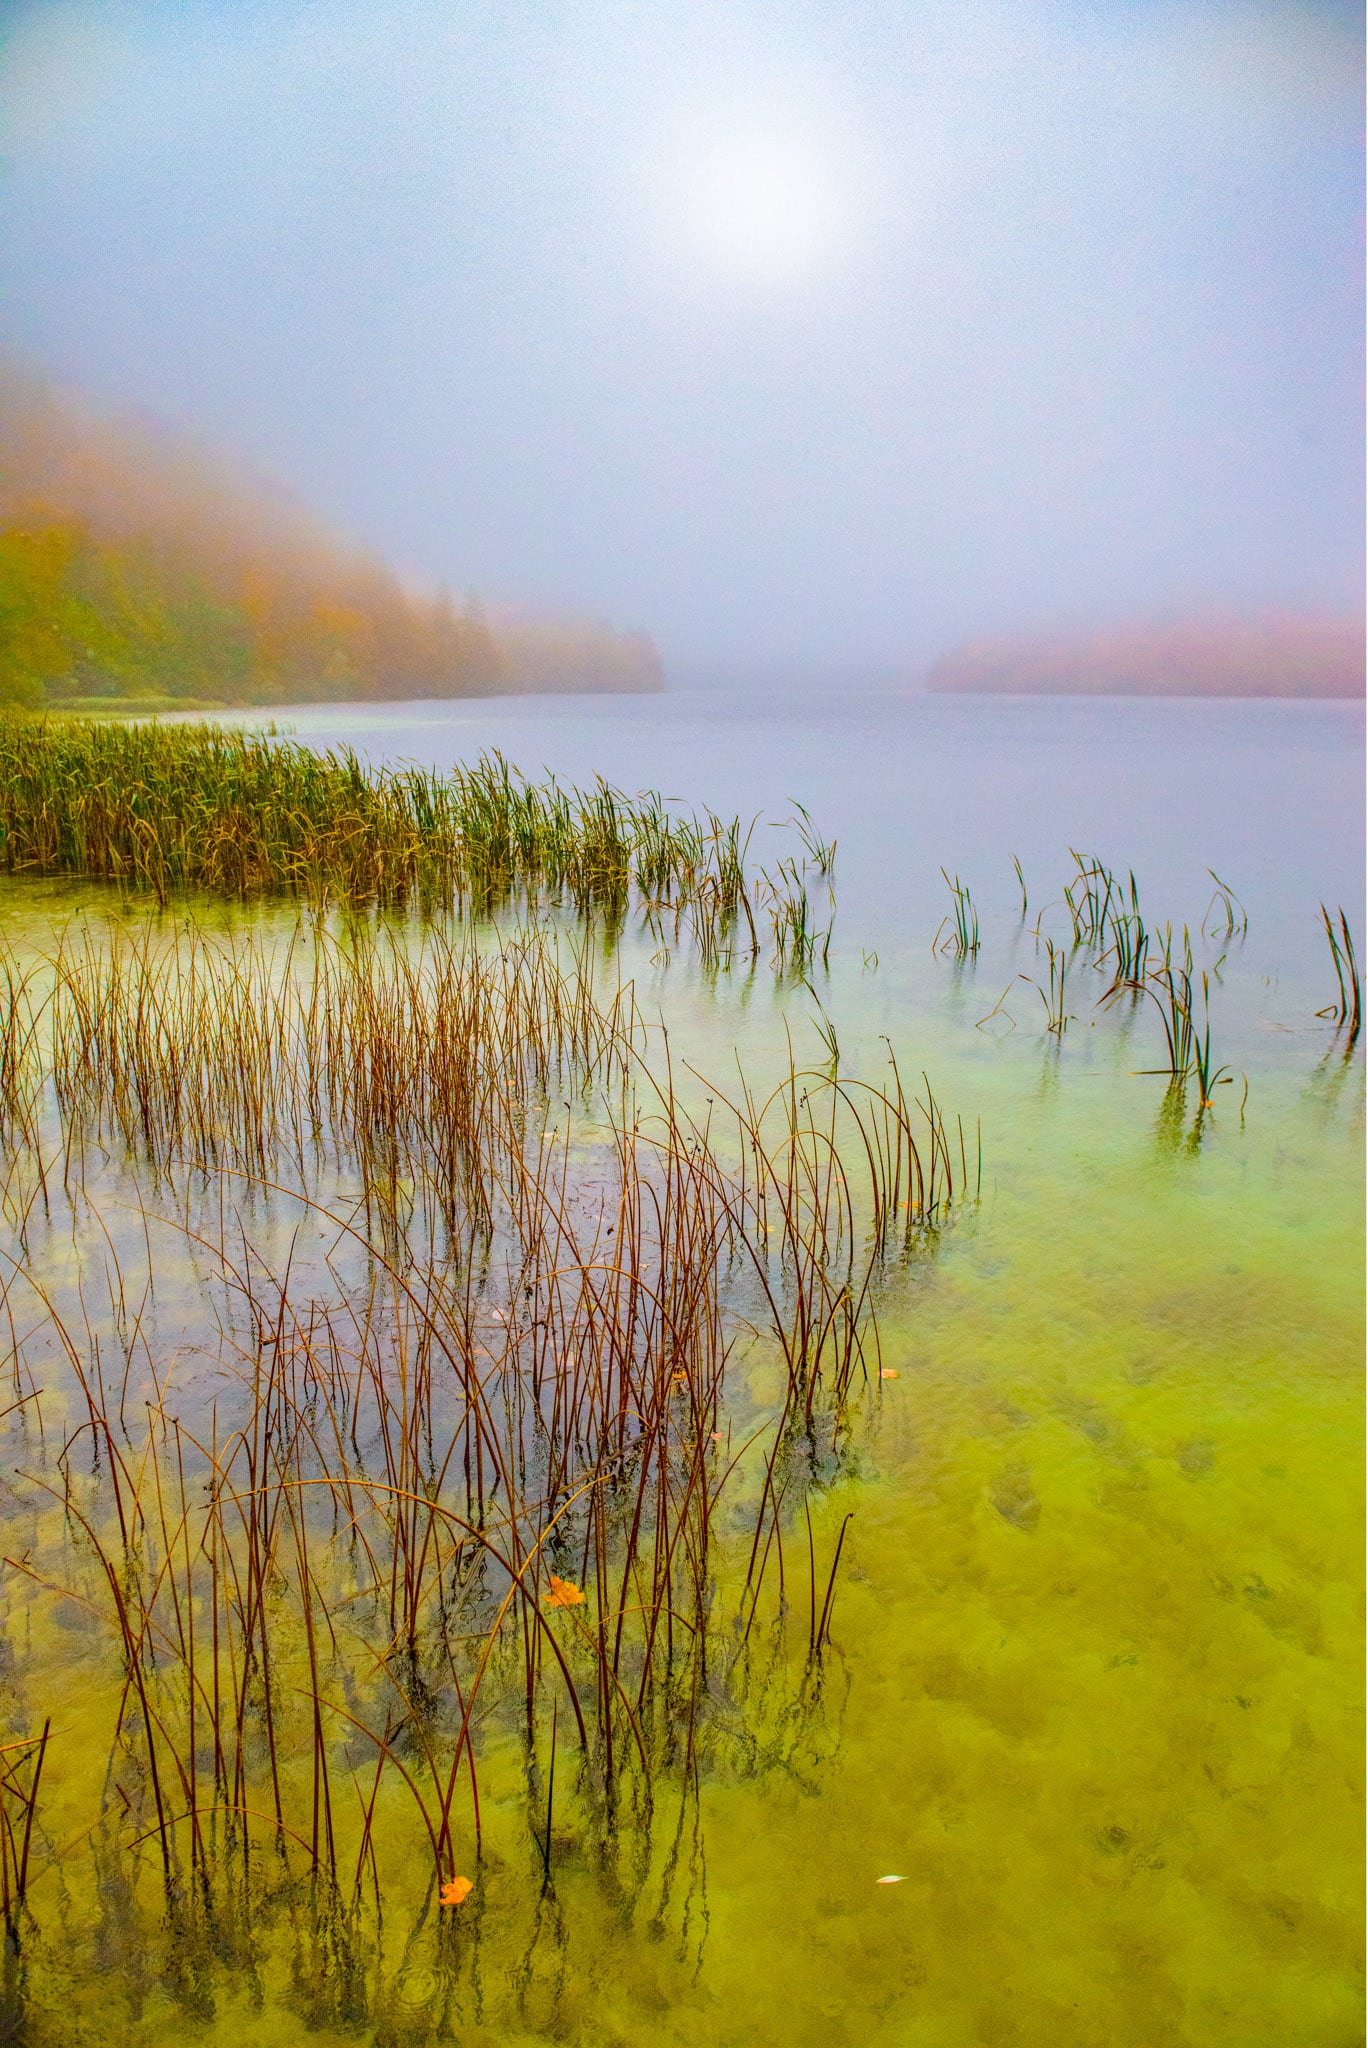 A foggy autumn morning on Lake Ciginovac in Plitvice Lakes National Park in Croatia.